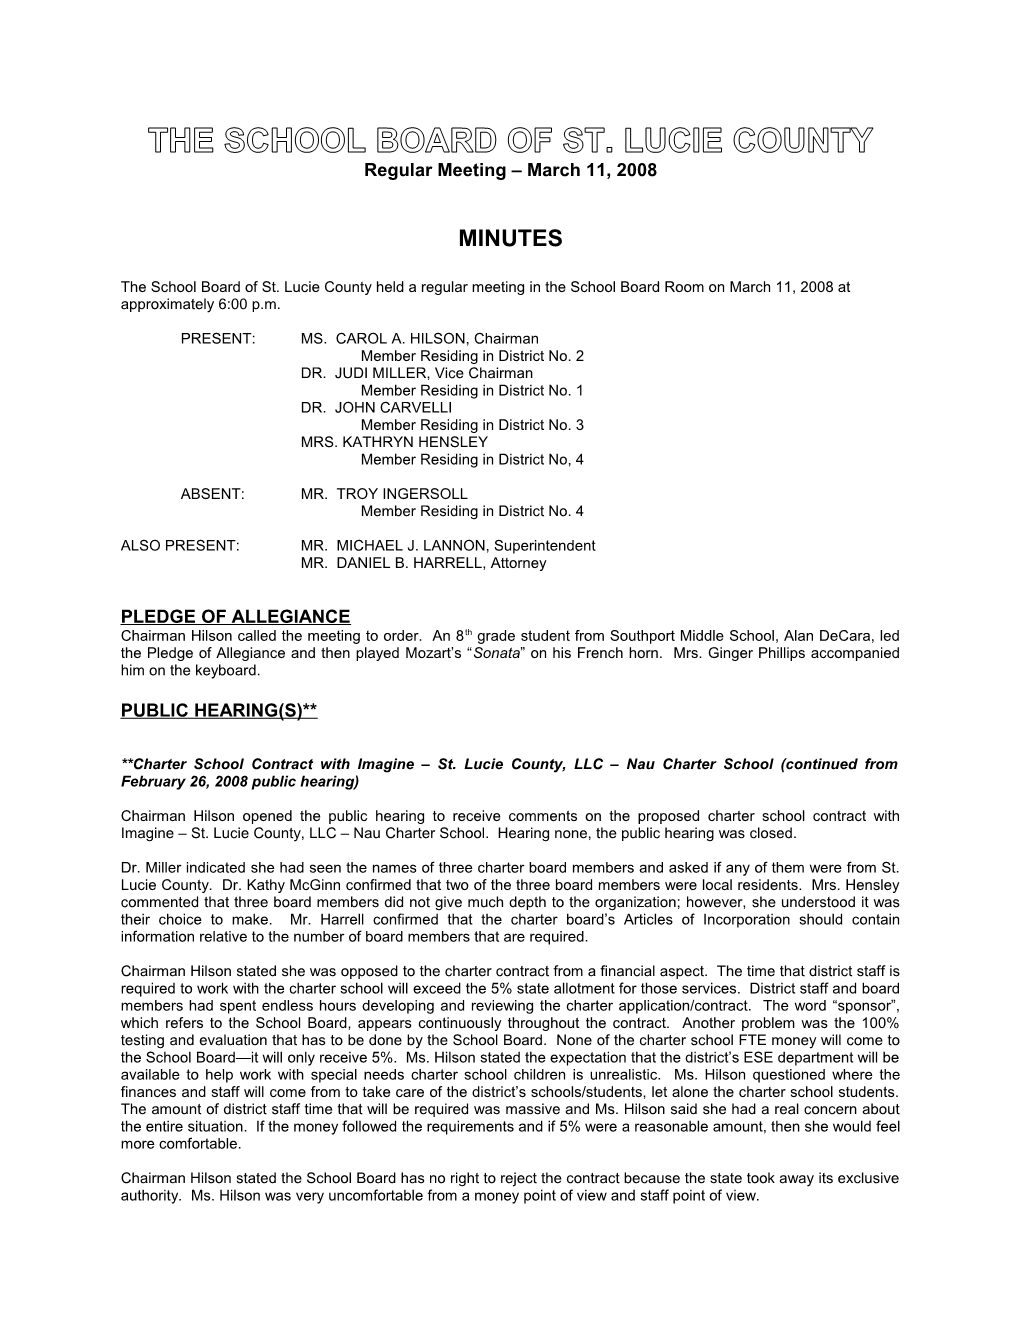 03-11-08 SLCSB Regular Meeting Minutes